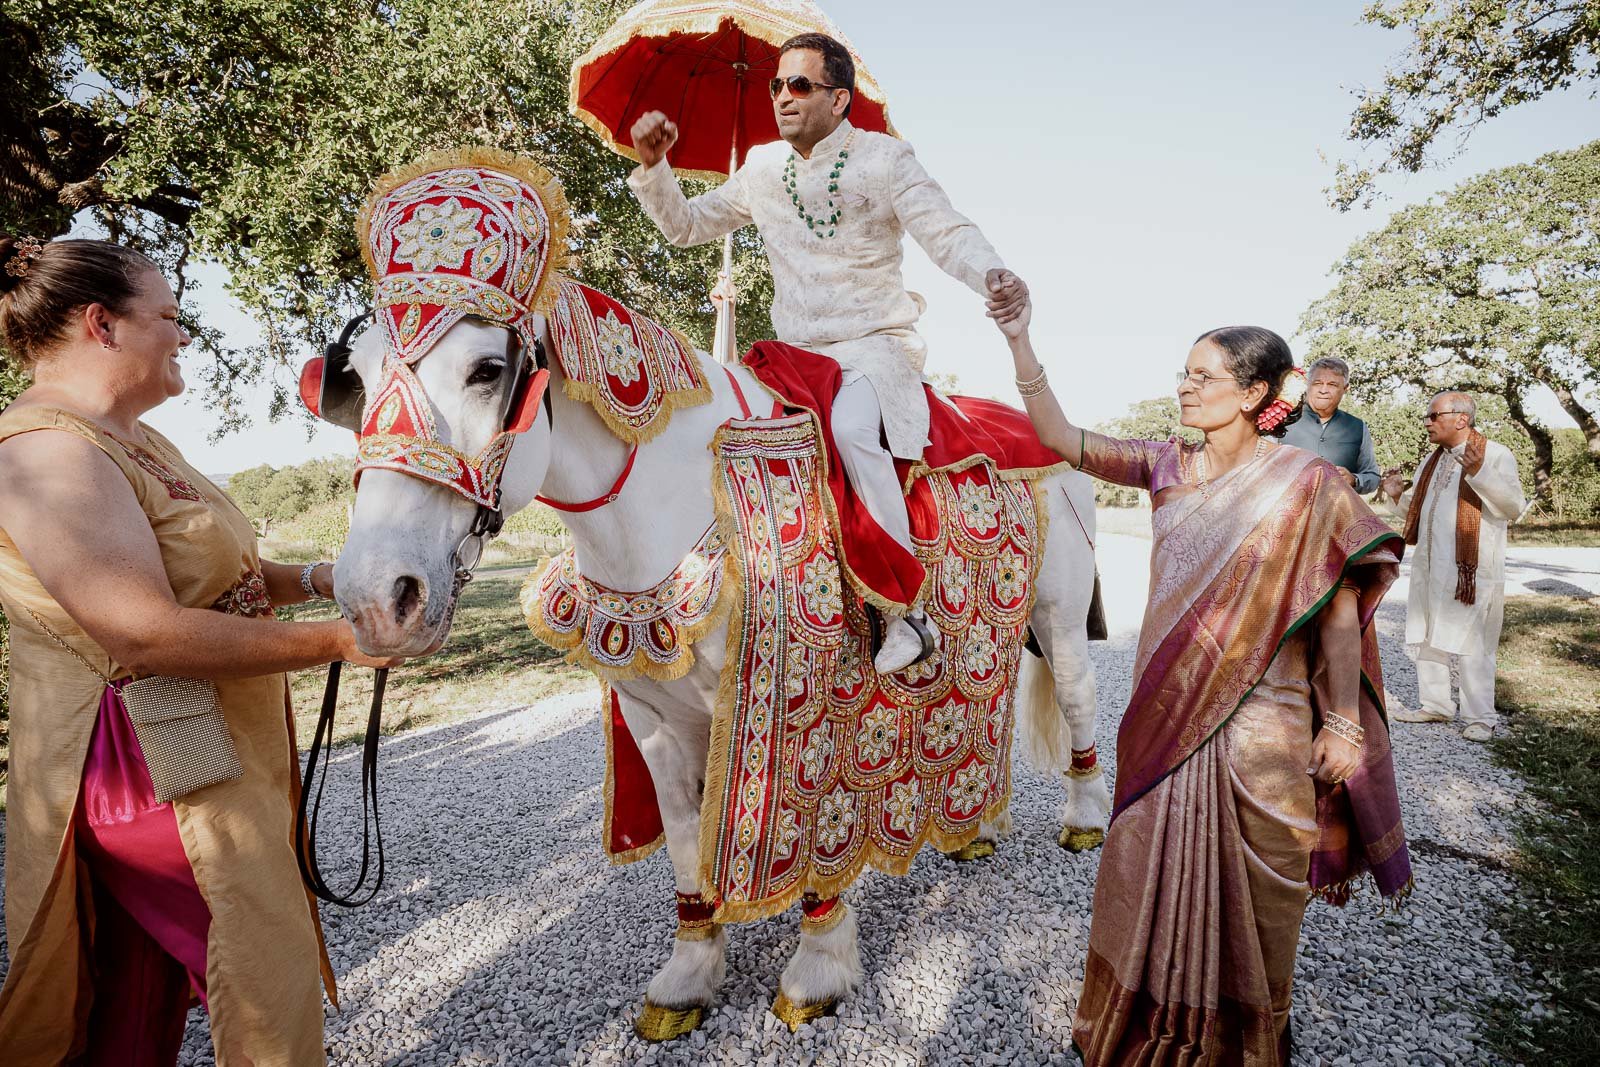 17 South Asian Indian Wedding Camp Lucy Texas Leica Wedding Photographer Philip Thomas